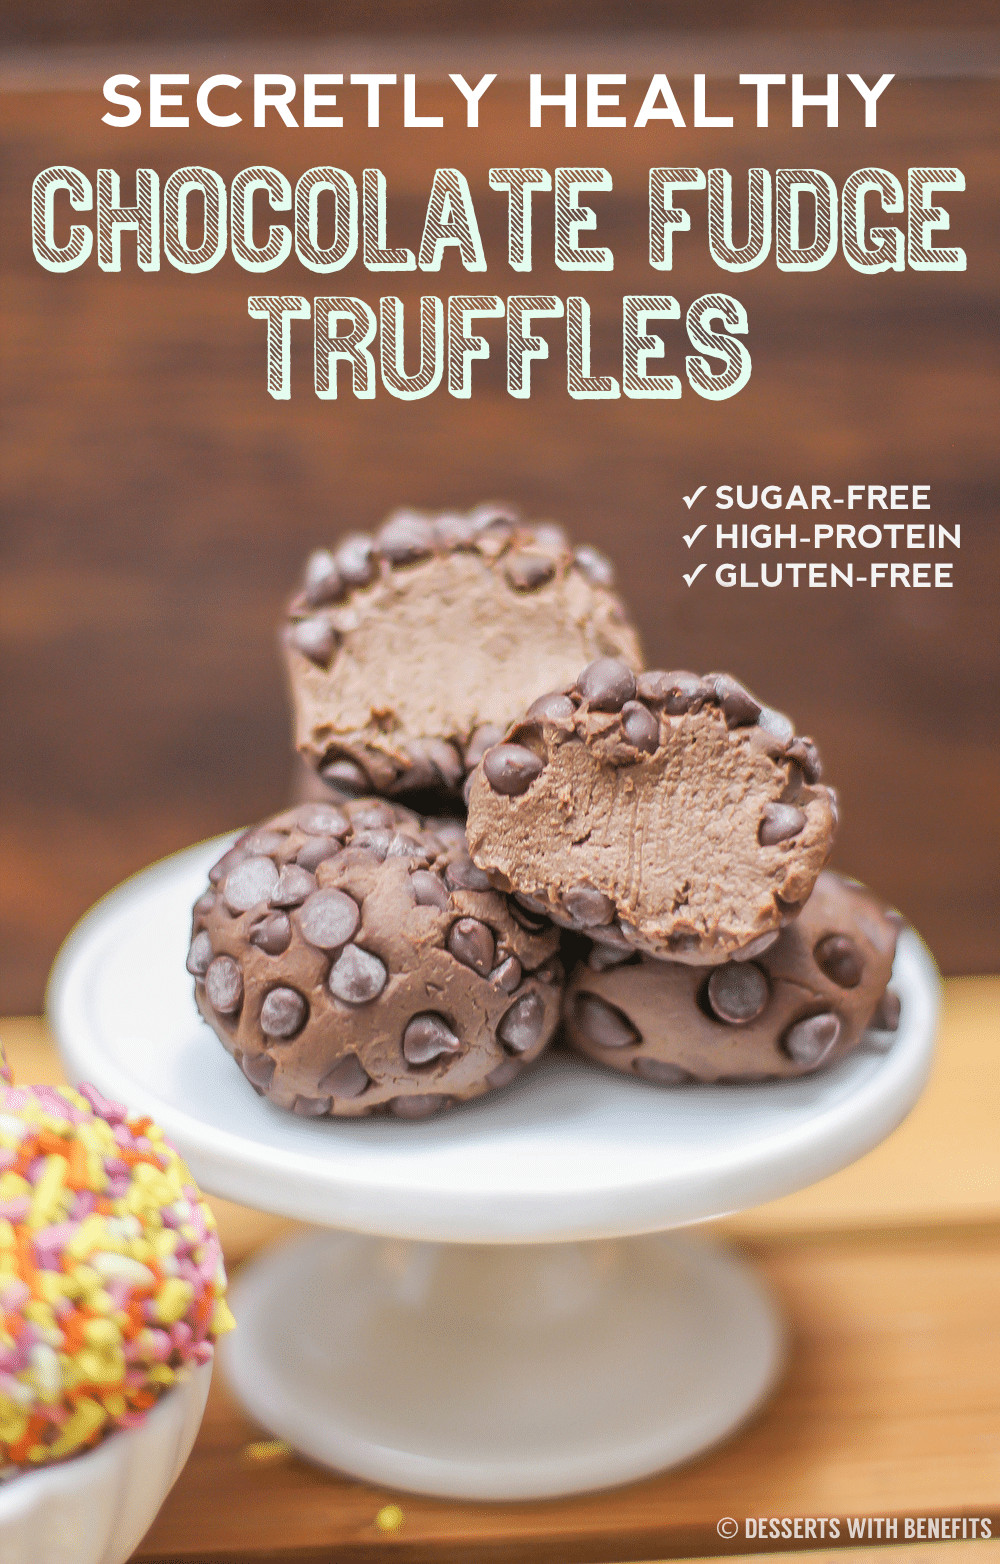 Healthy Low Sugar Desserts
 Healthy Chocolate Fudge Truffles Recipe